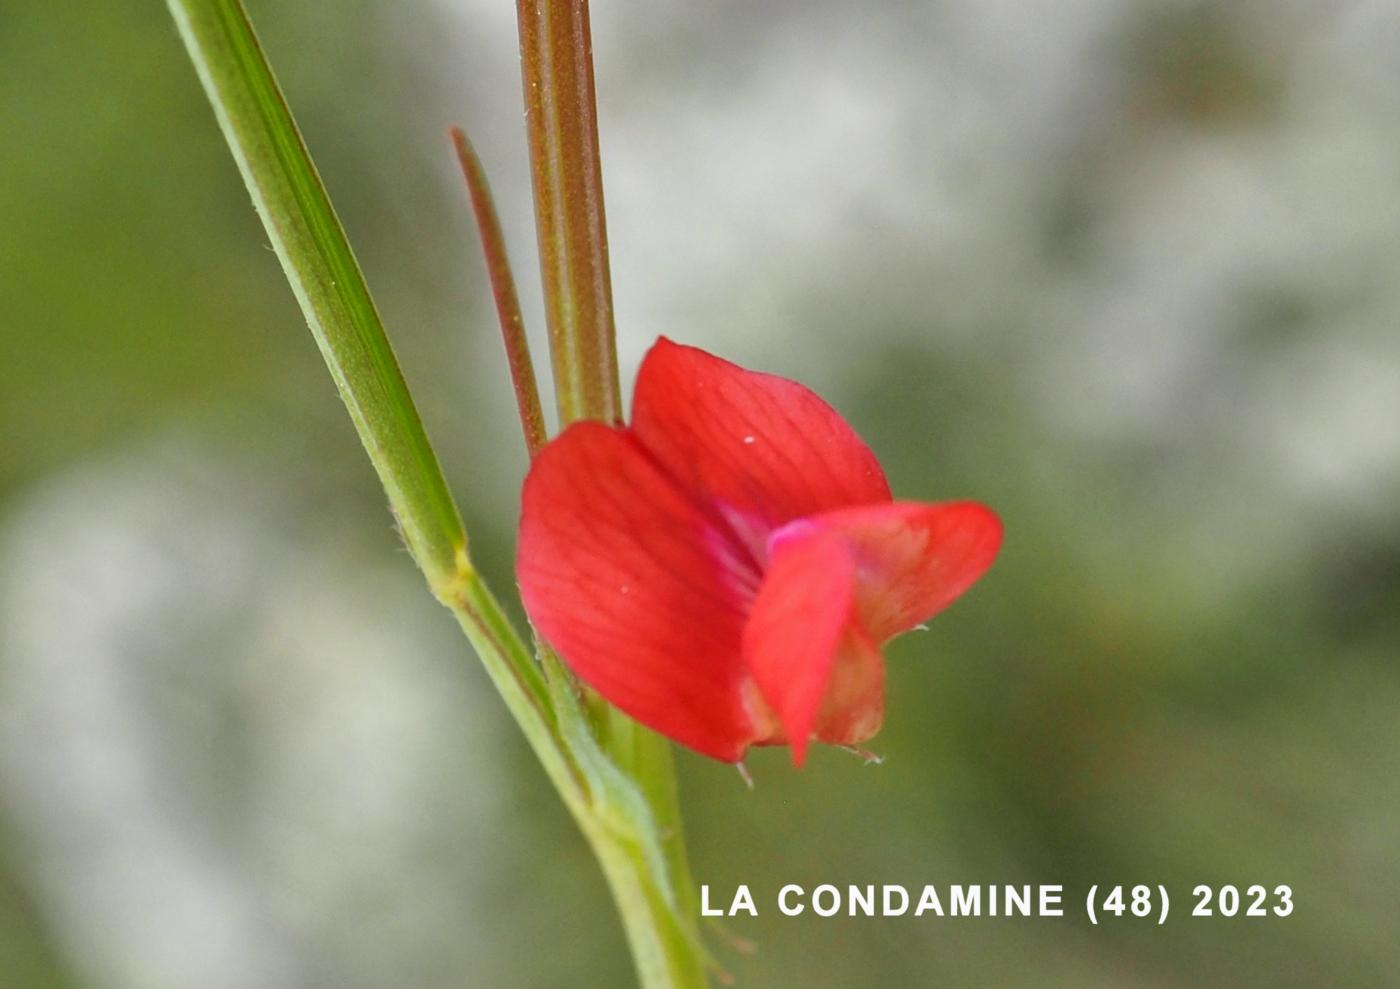 Vetchling, Round-seeded flower